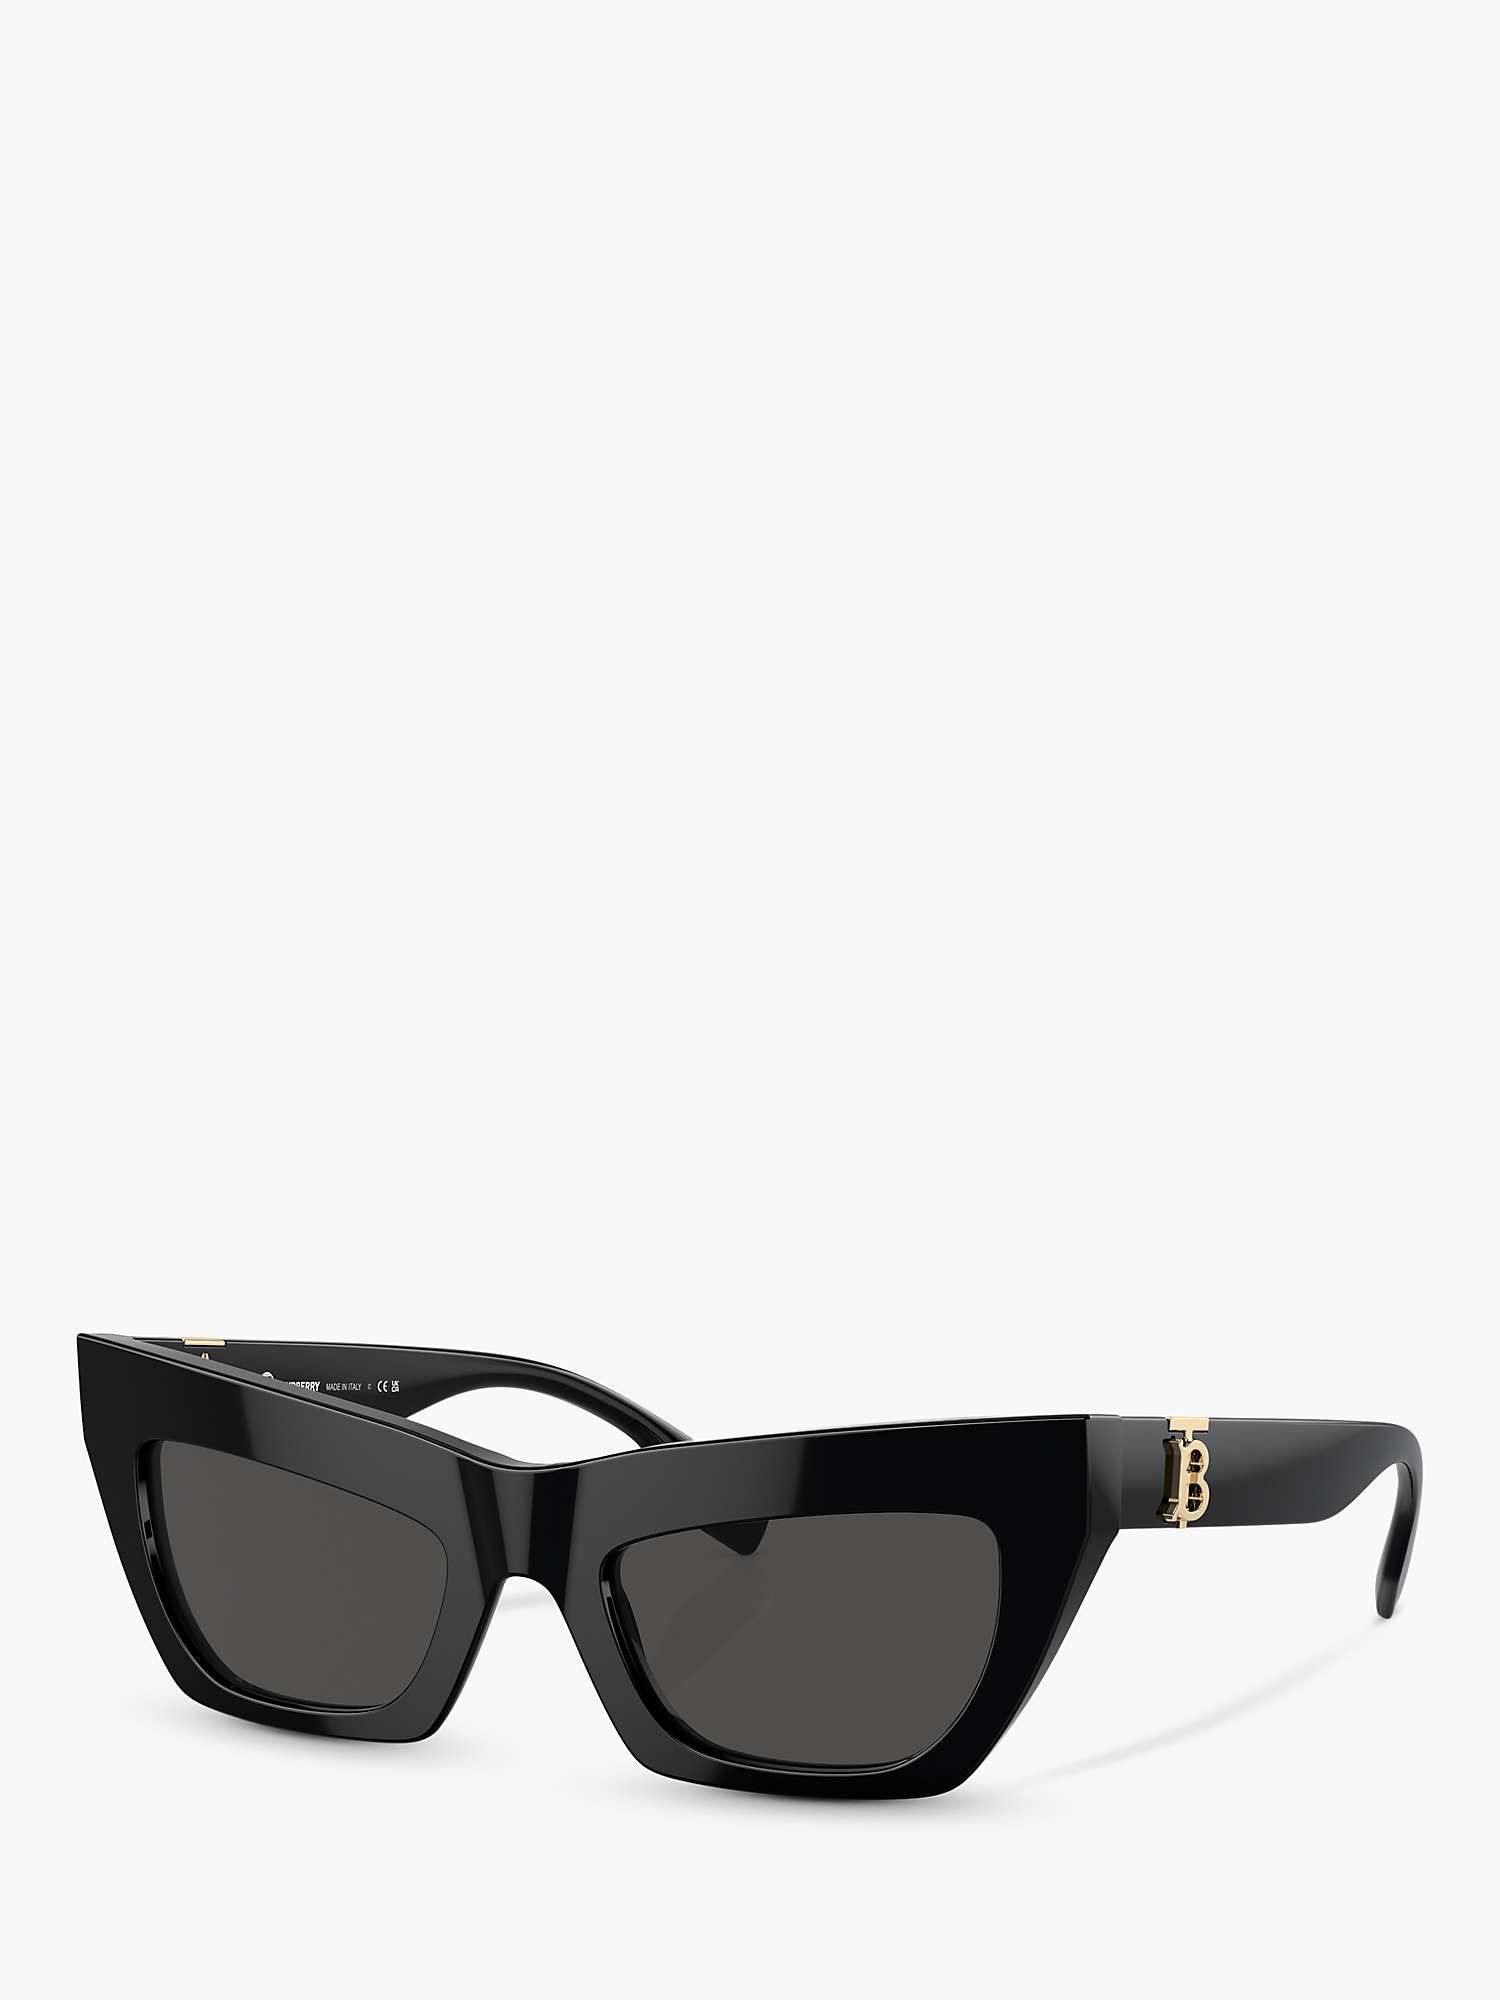 Buy Burberry BE4405 Women's Cat's Eye Sunglasses, Black/Black Online at johnlewis.com